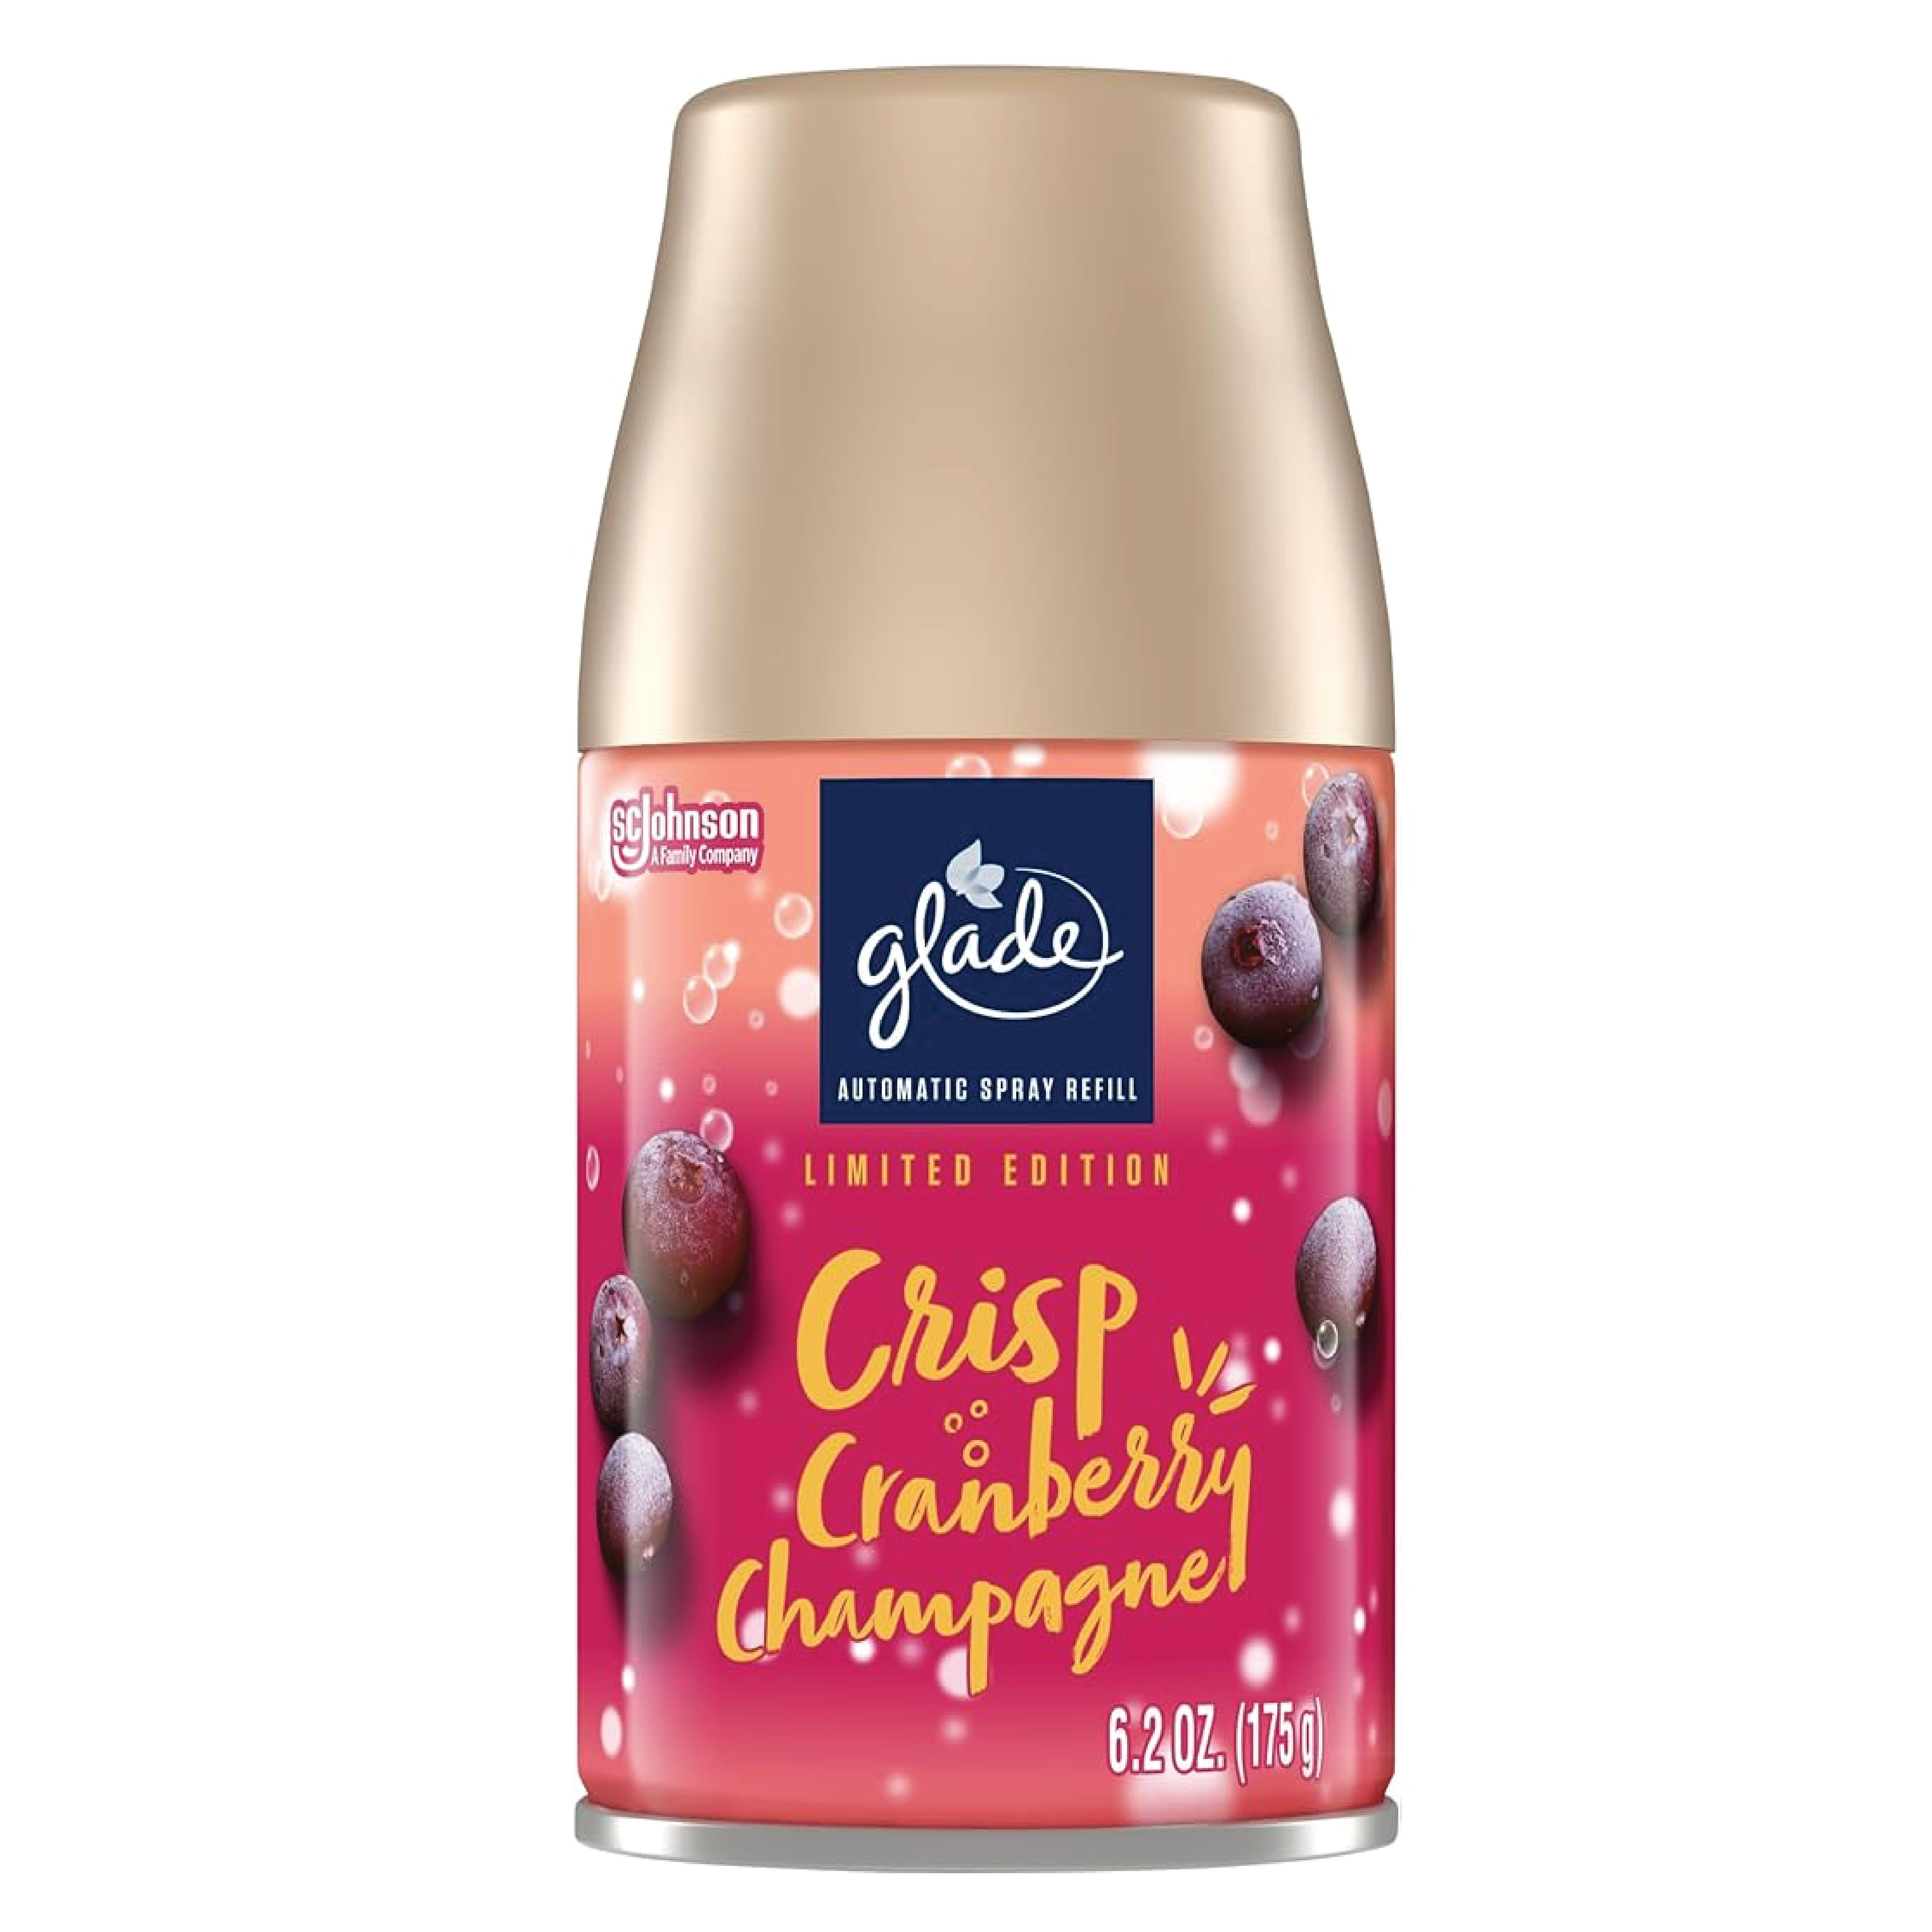 Glade Limited Edition Crisp Cranberry Champagne Air Freshener Spray Refill 6.2oz